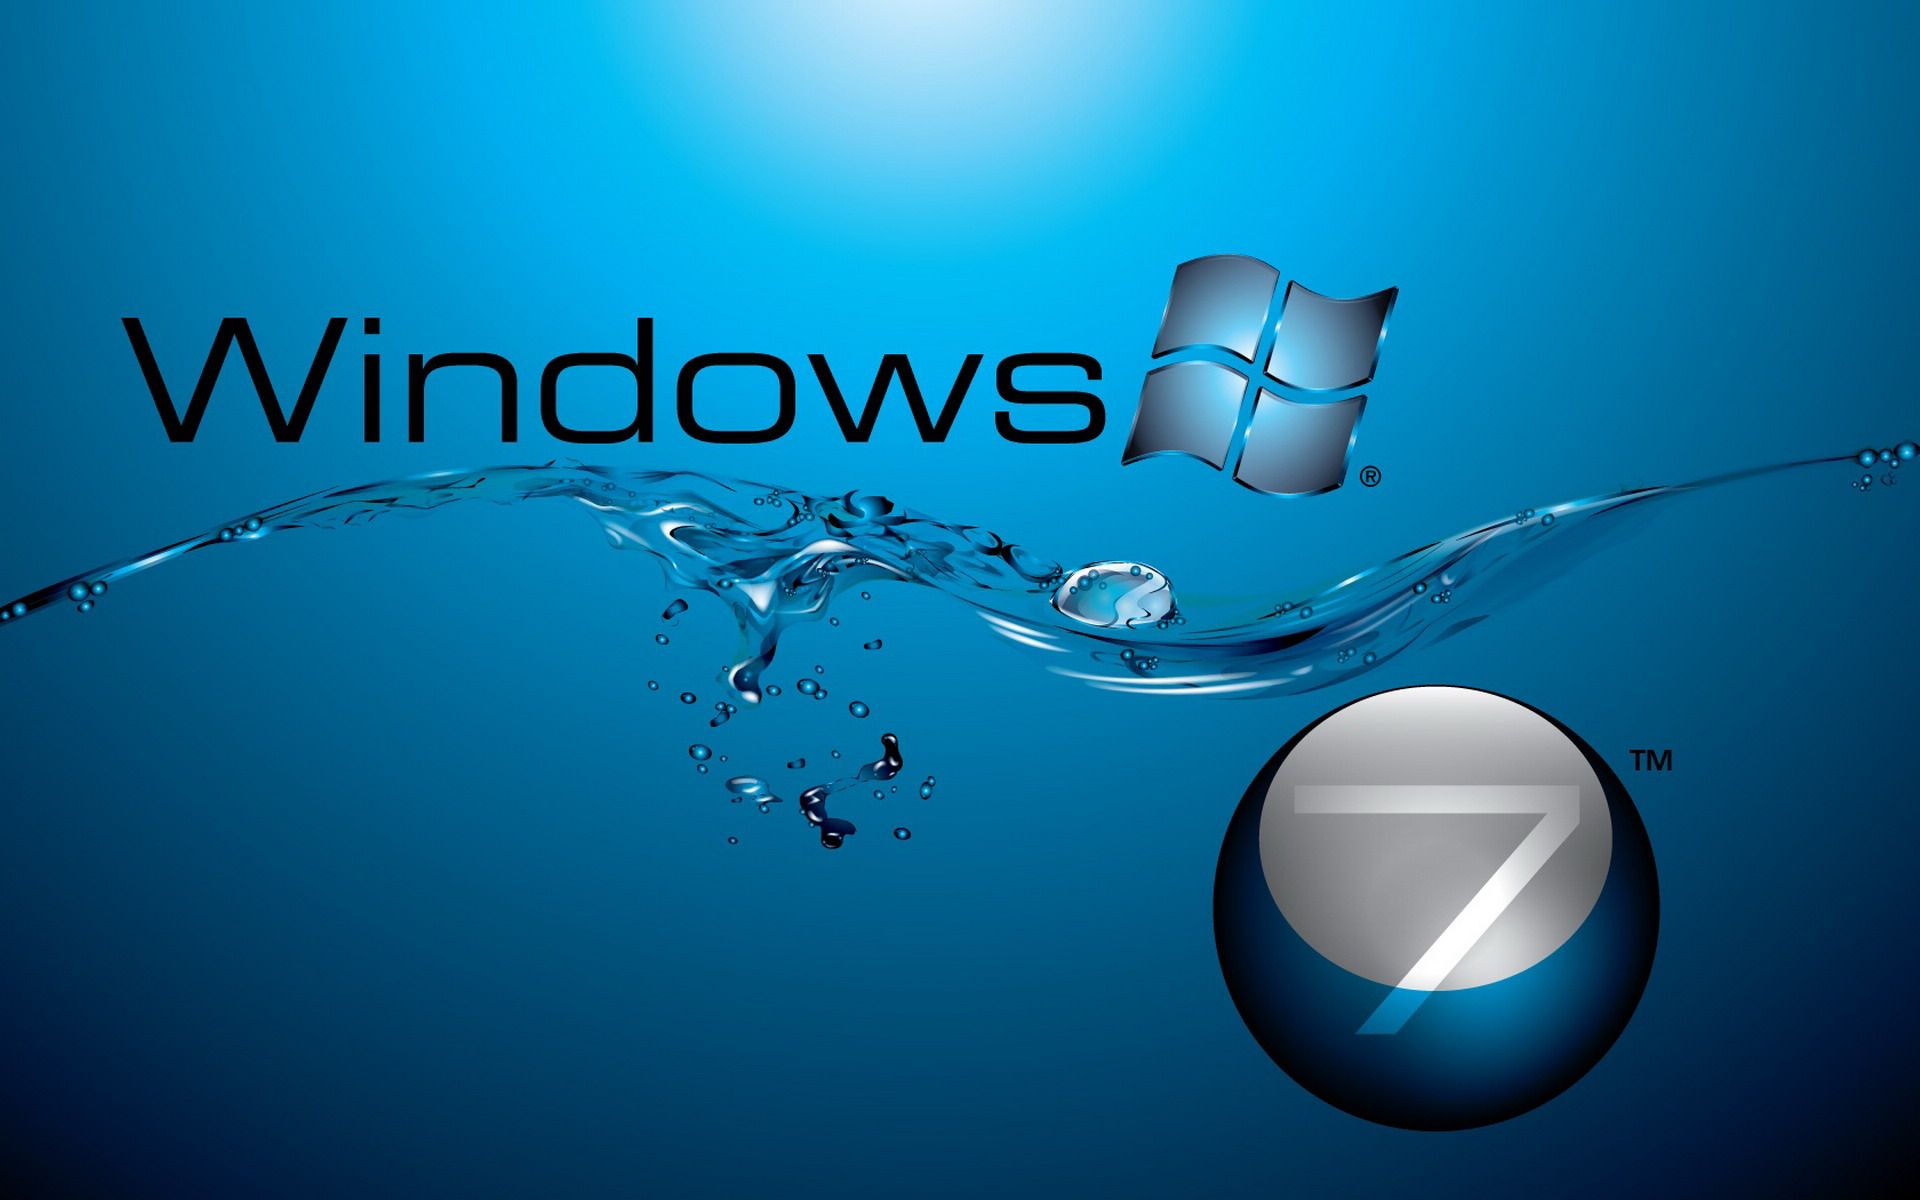 Microsoft windows 7 iso file download free